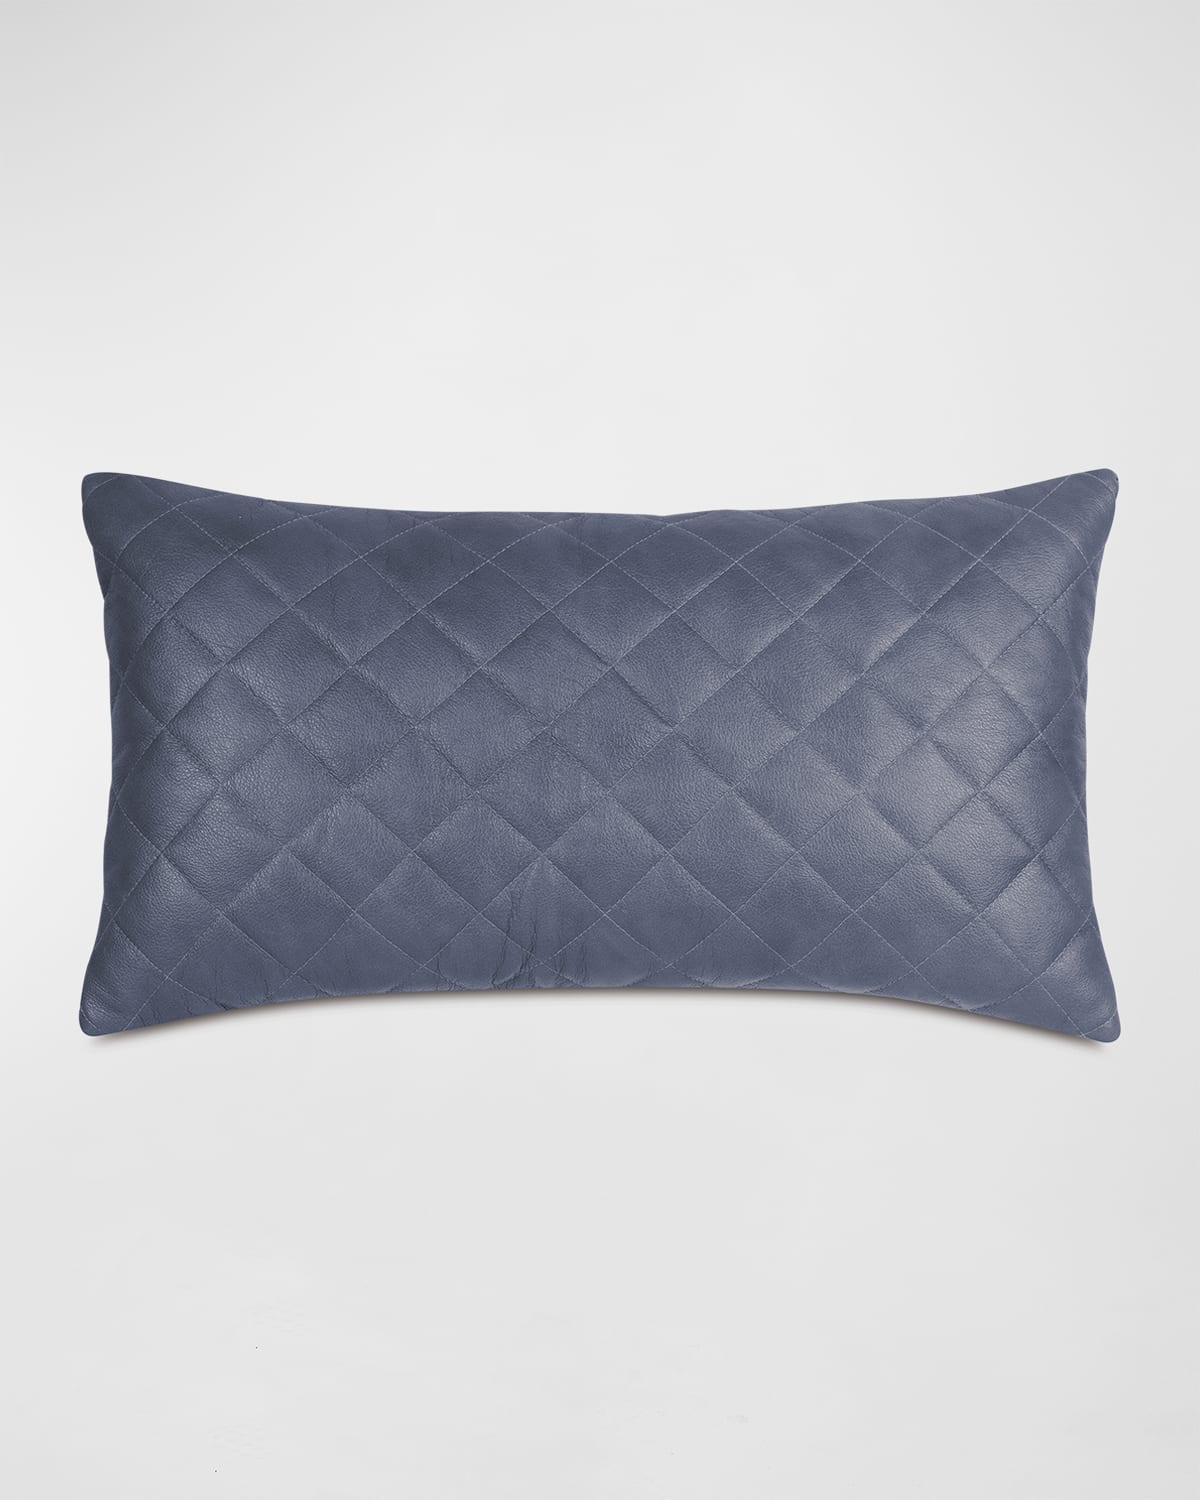 Noah Quilted Decorative Pillow